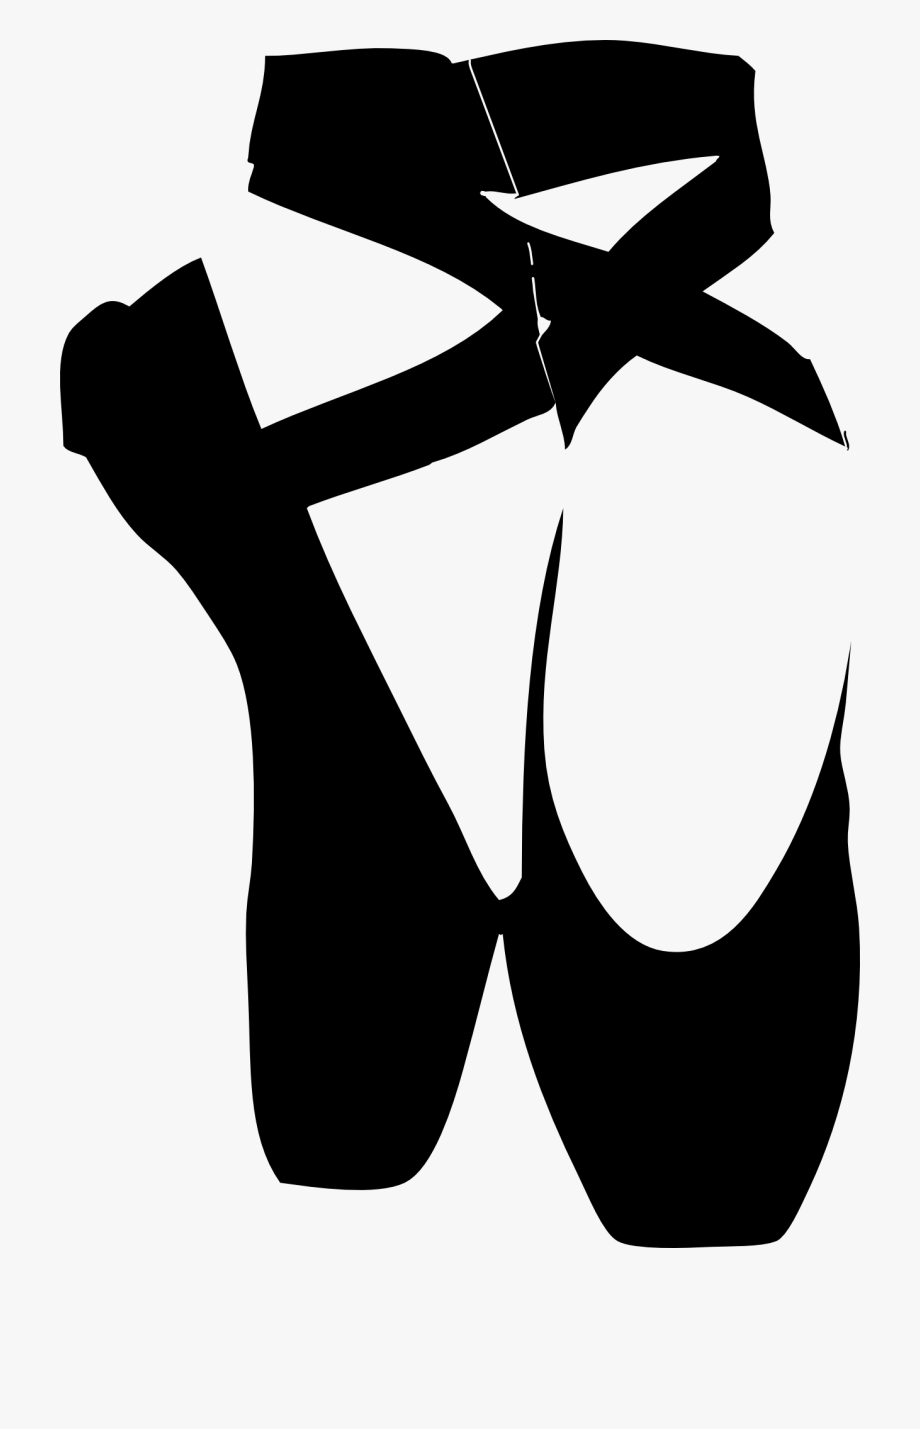 10000 Dancing Shoes Illustrations RoyaltyFree Vector Graphics  Clip  Art  iStock  Ballet shoes Dance Tap shoes